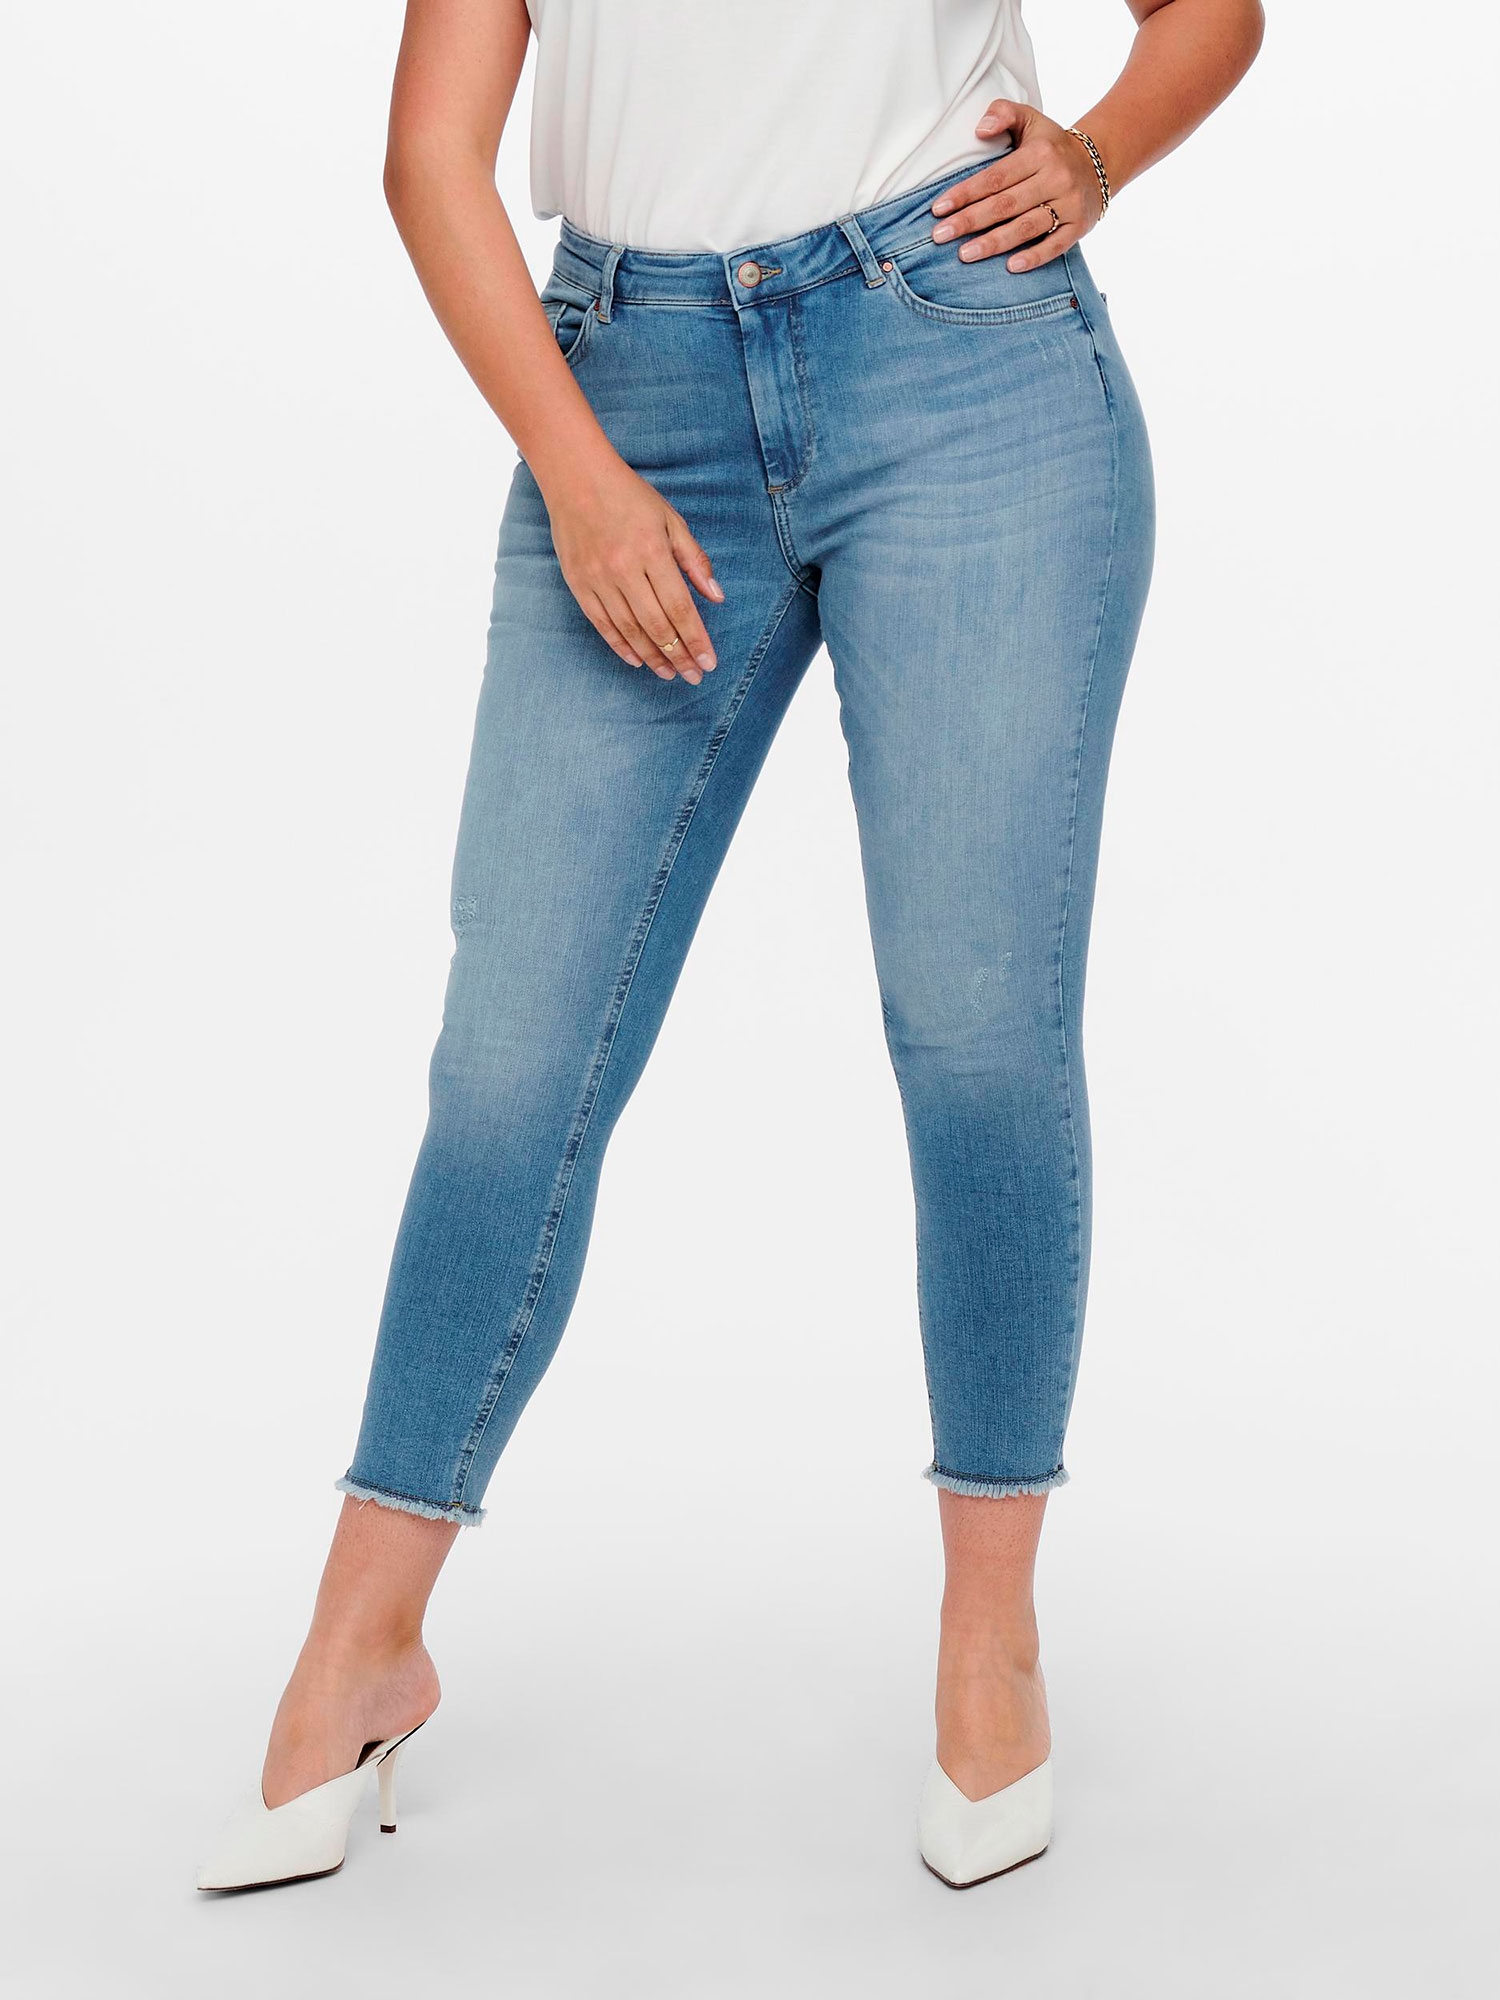 WILLY - Lyse stretch jeans med frynser ved anklen fra Only Carmakoma